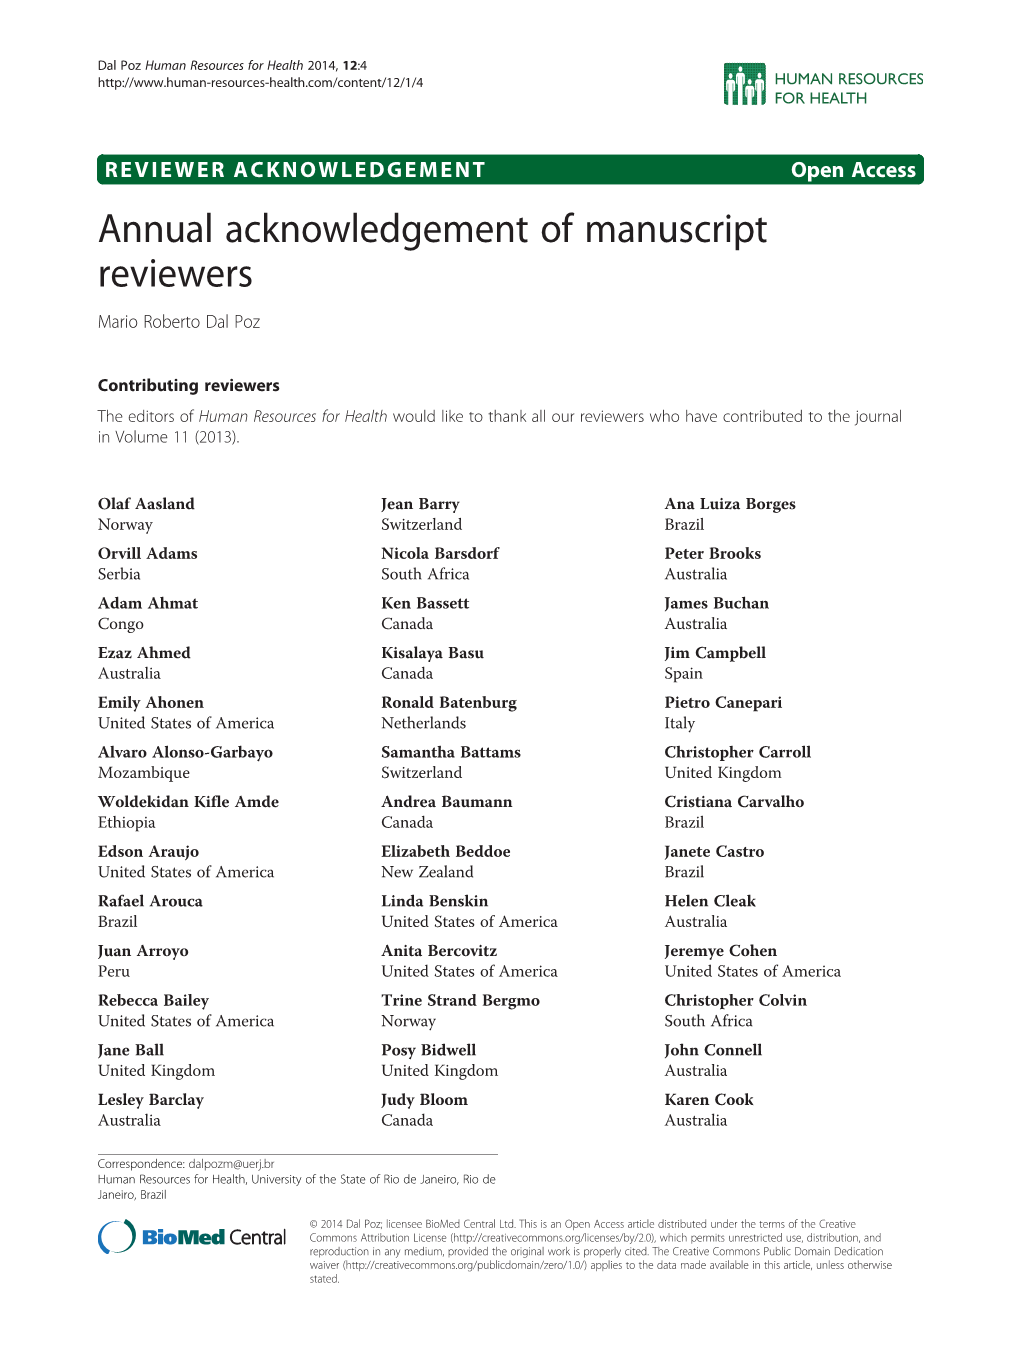 Annual Acknowledgement of Manuscript Reviewers Mario Roberto Dal Poz